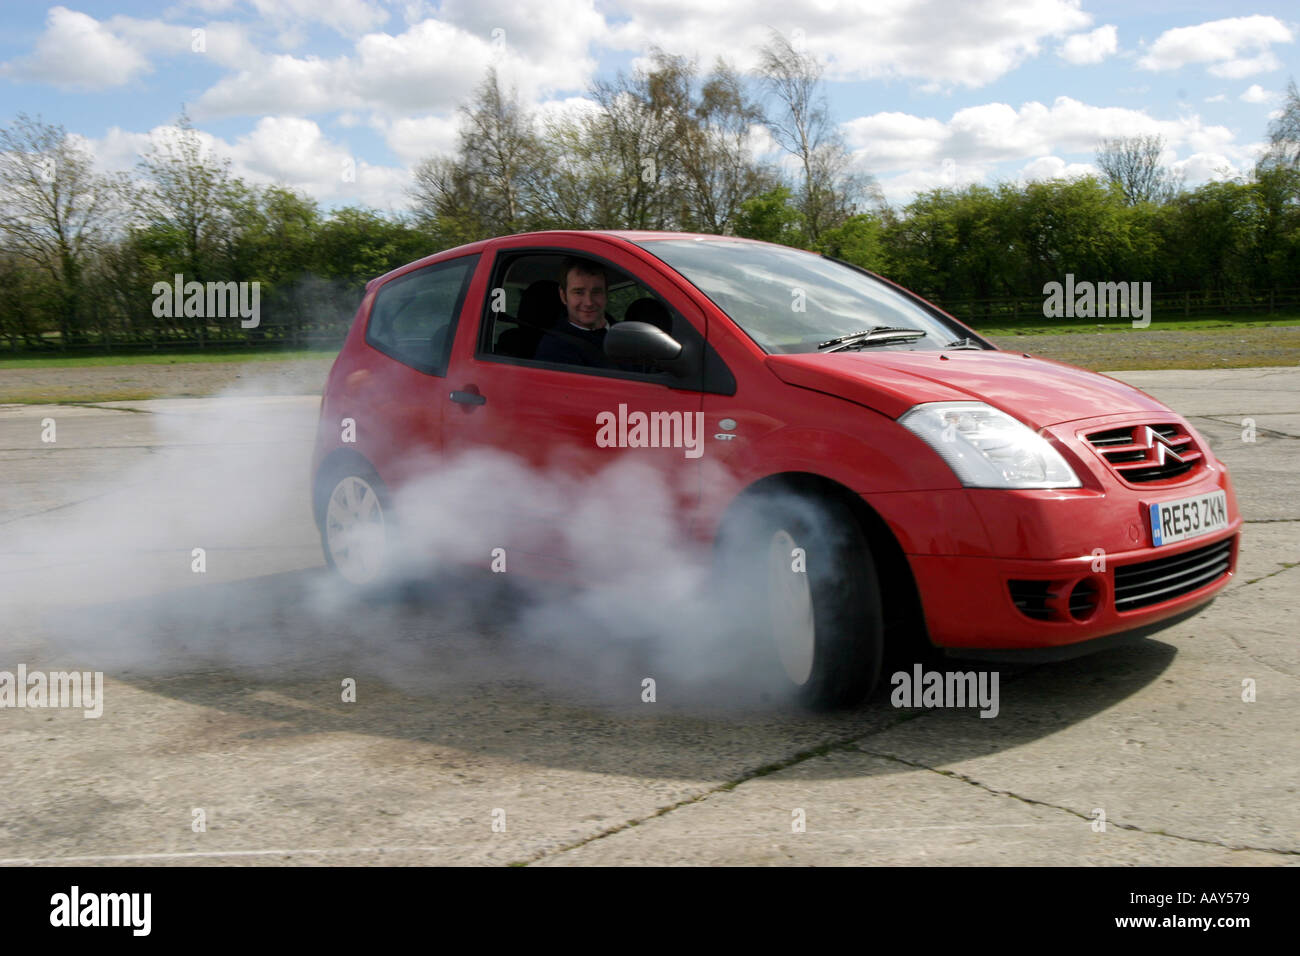 A stuntman does a doughnut burnout in a Citroen C2 hatchback car Stock Photo